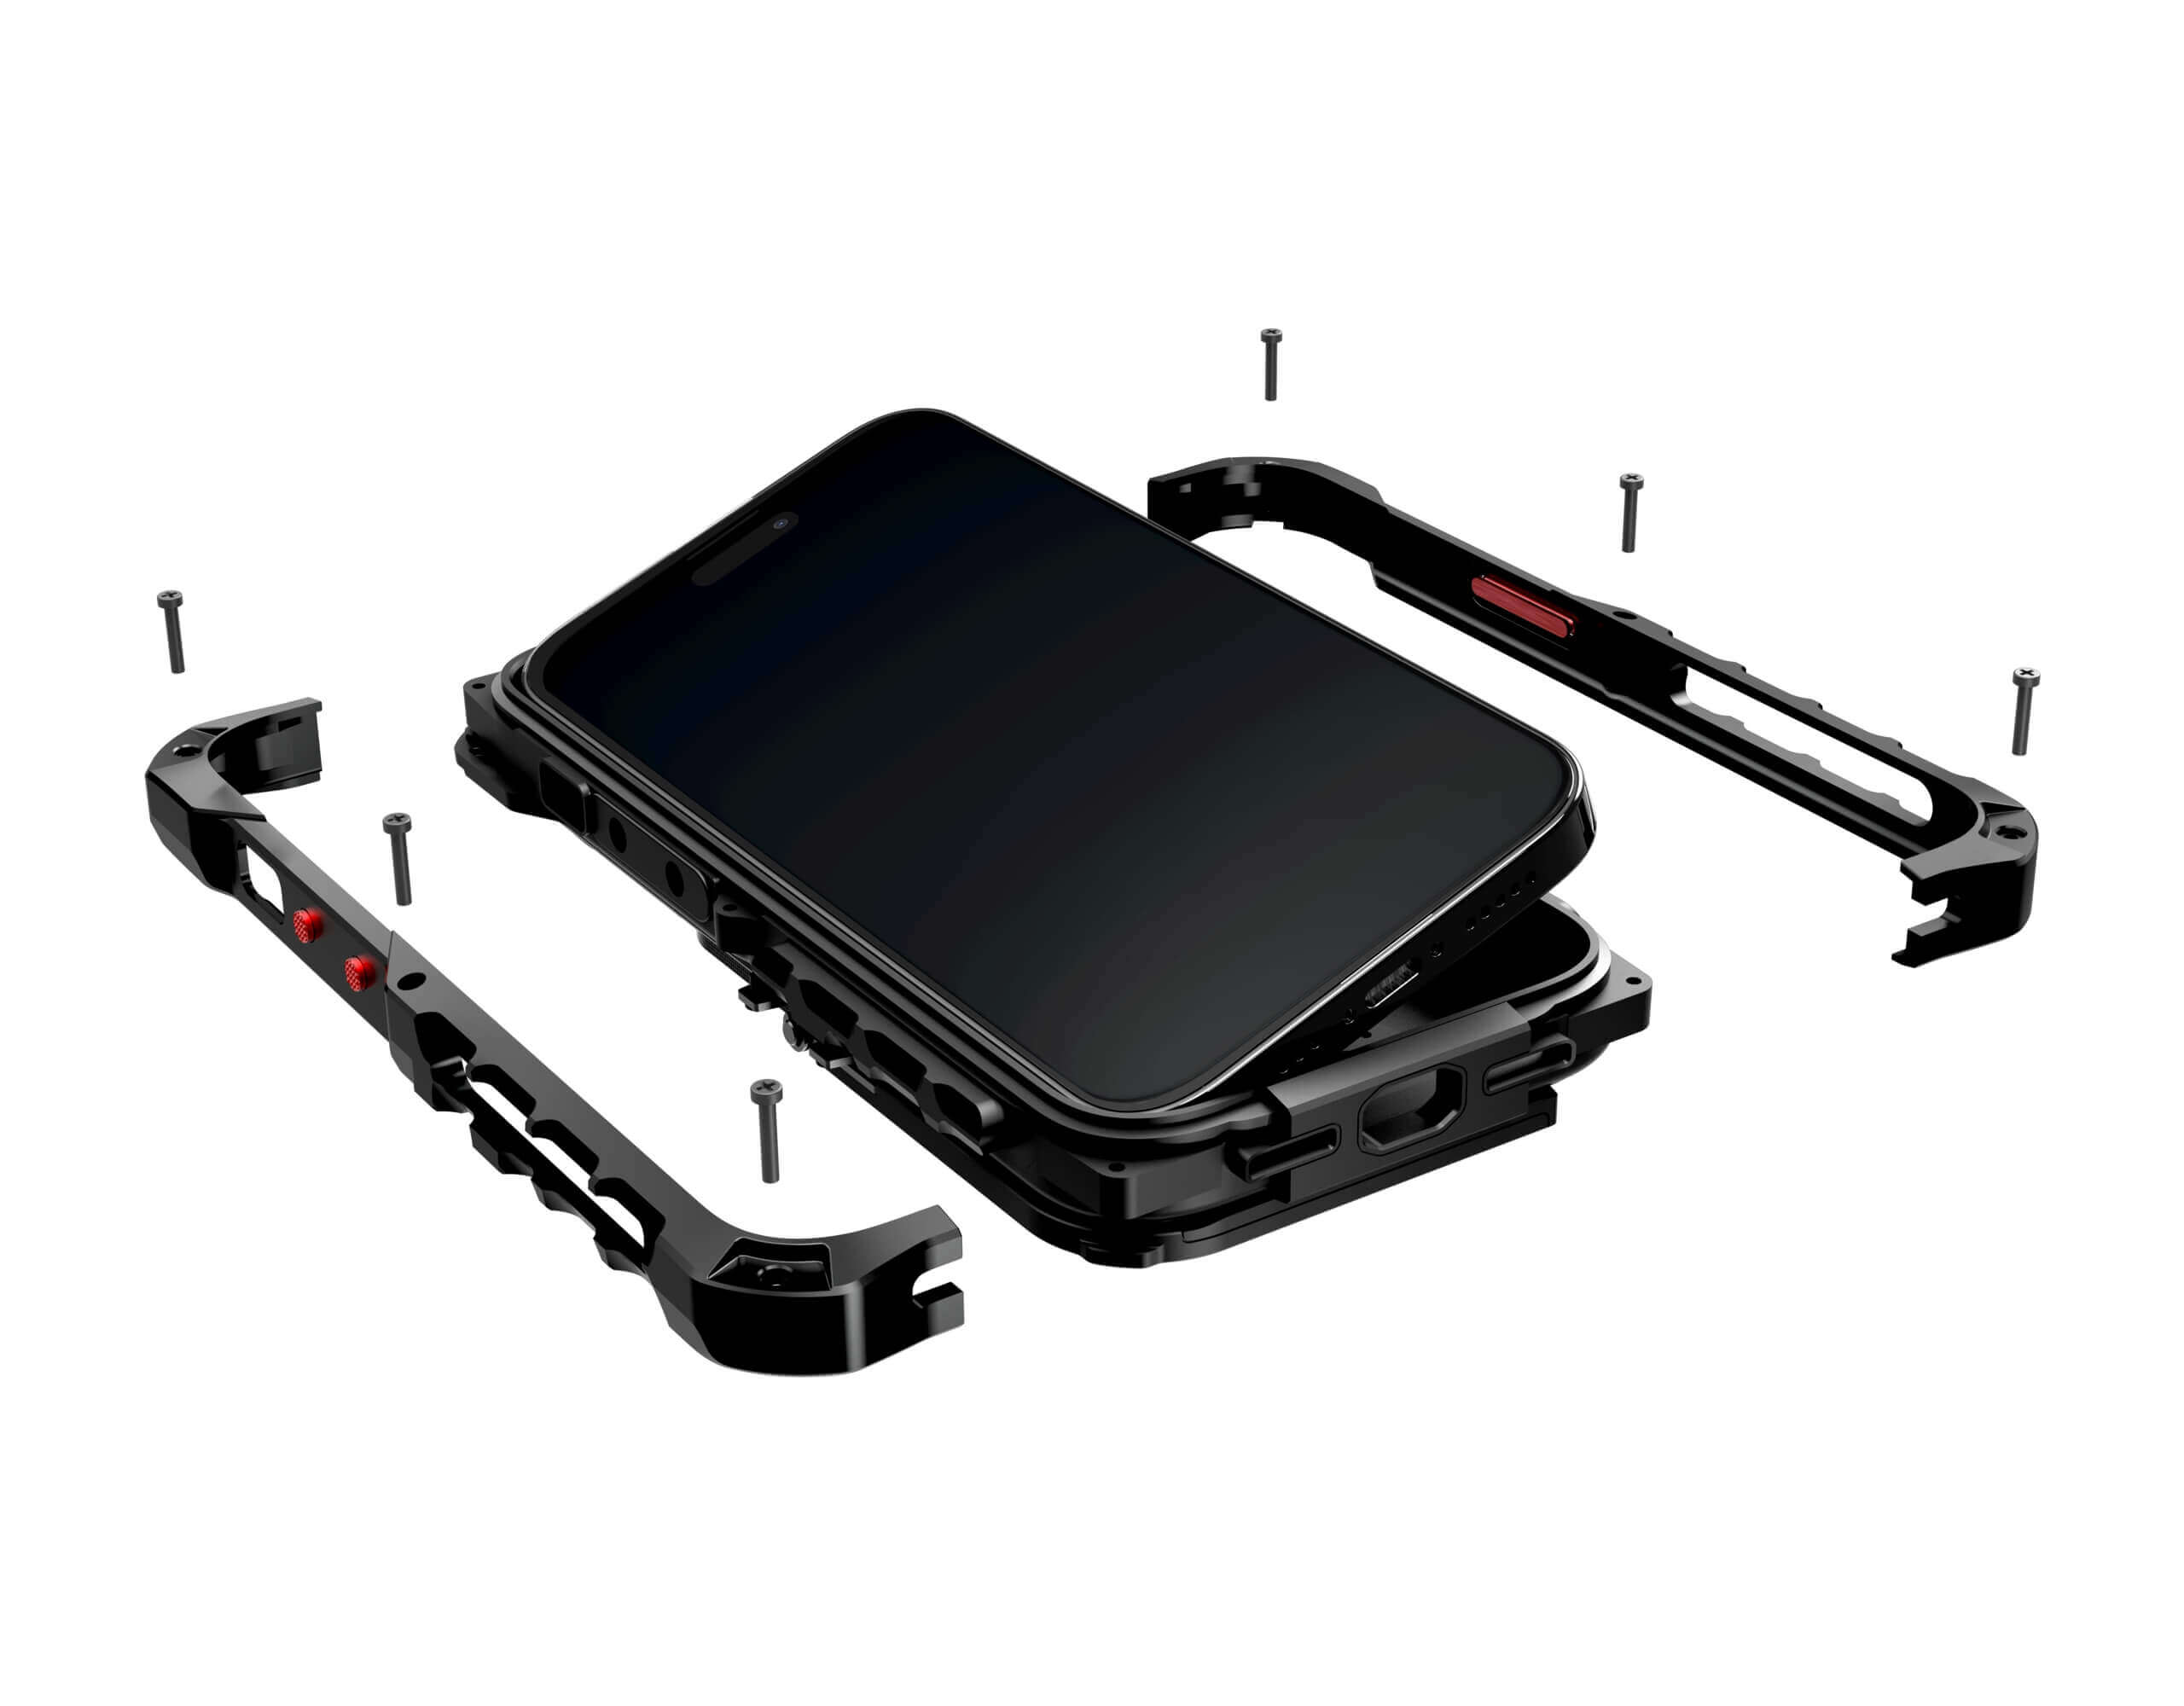 Element Case - Black Ops for iPhone 12/12 Pro - Black